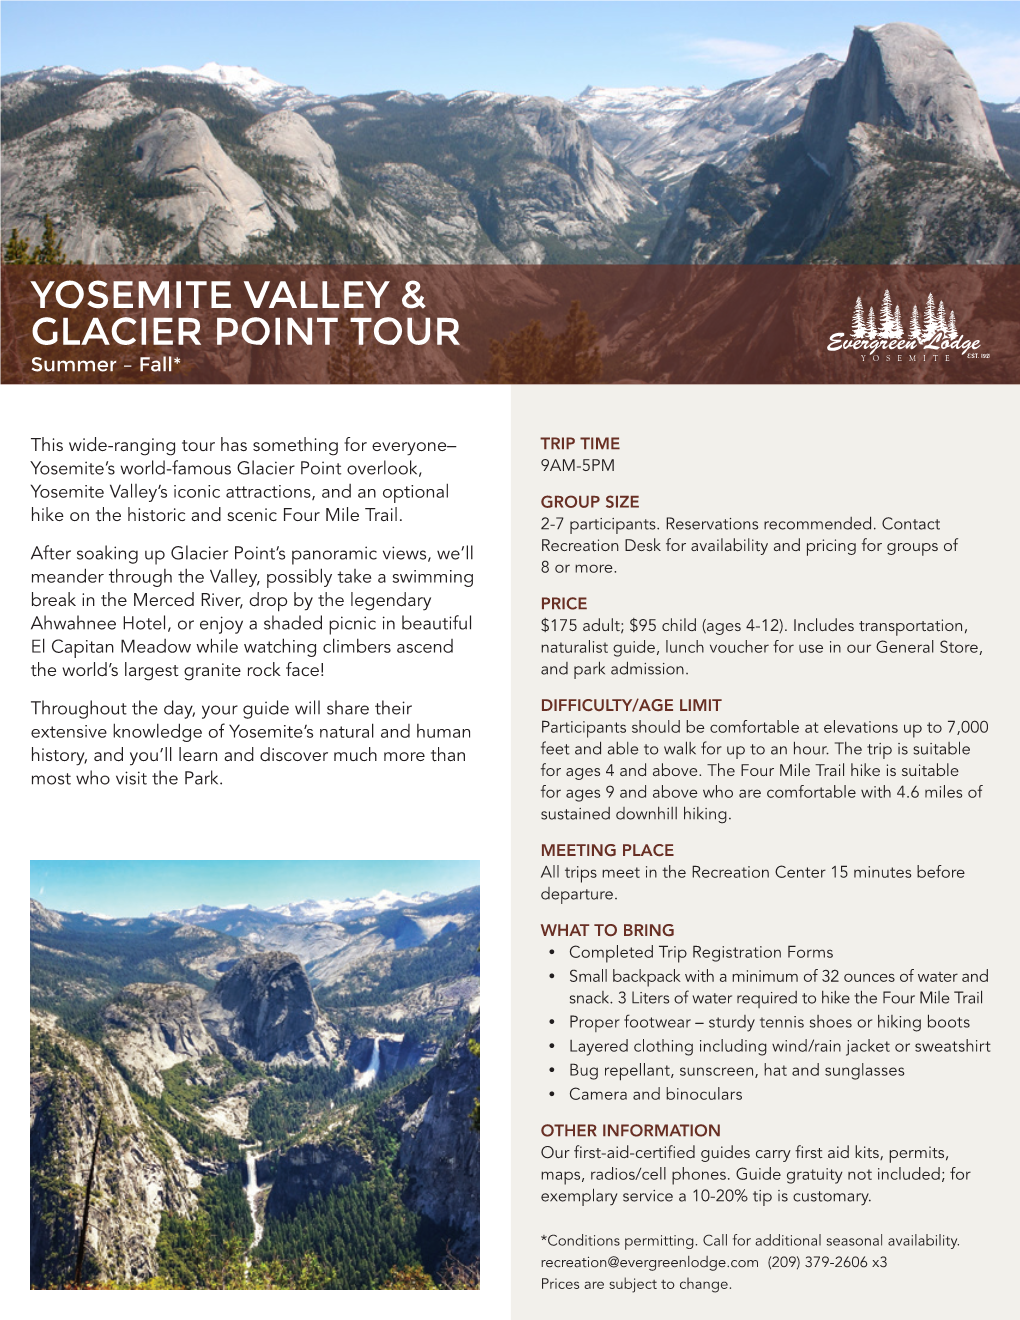 Yosemite Valley & Glacier Point Tour